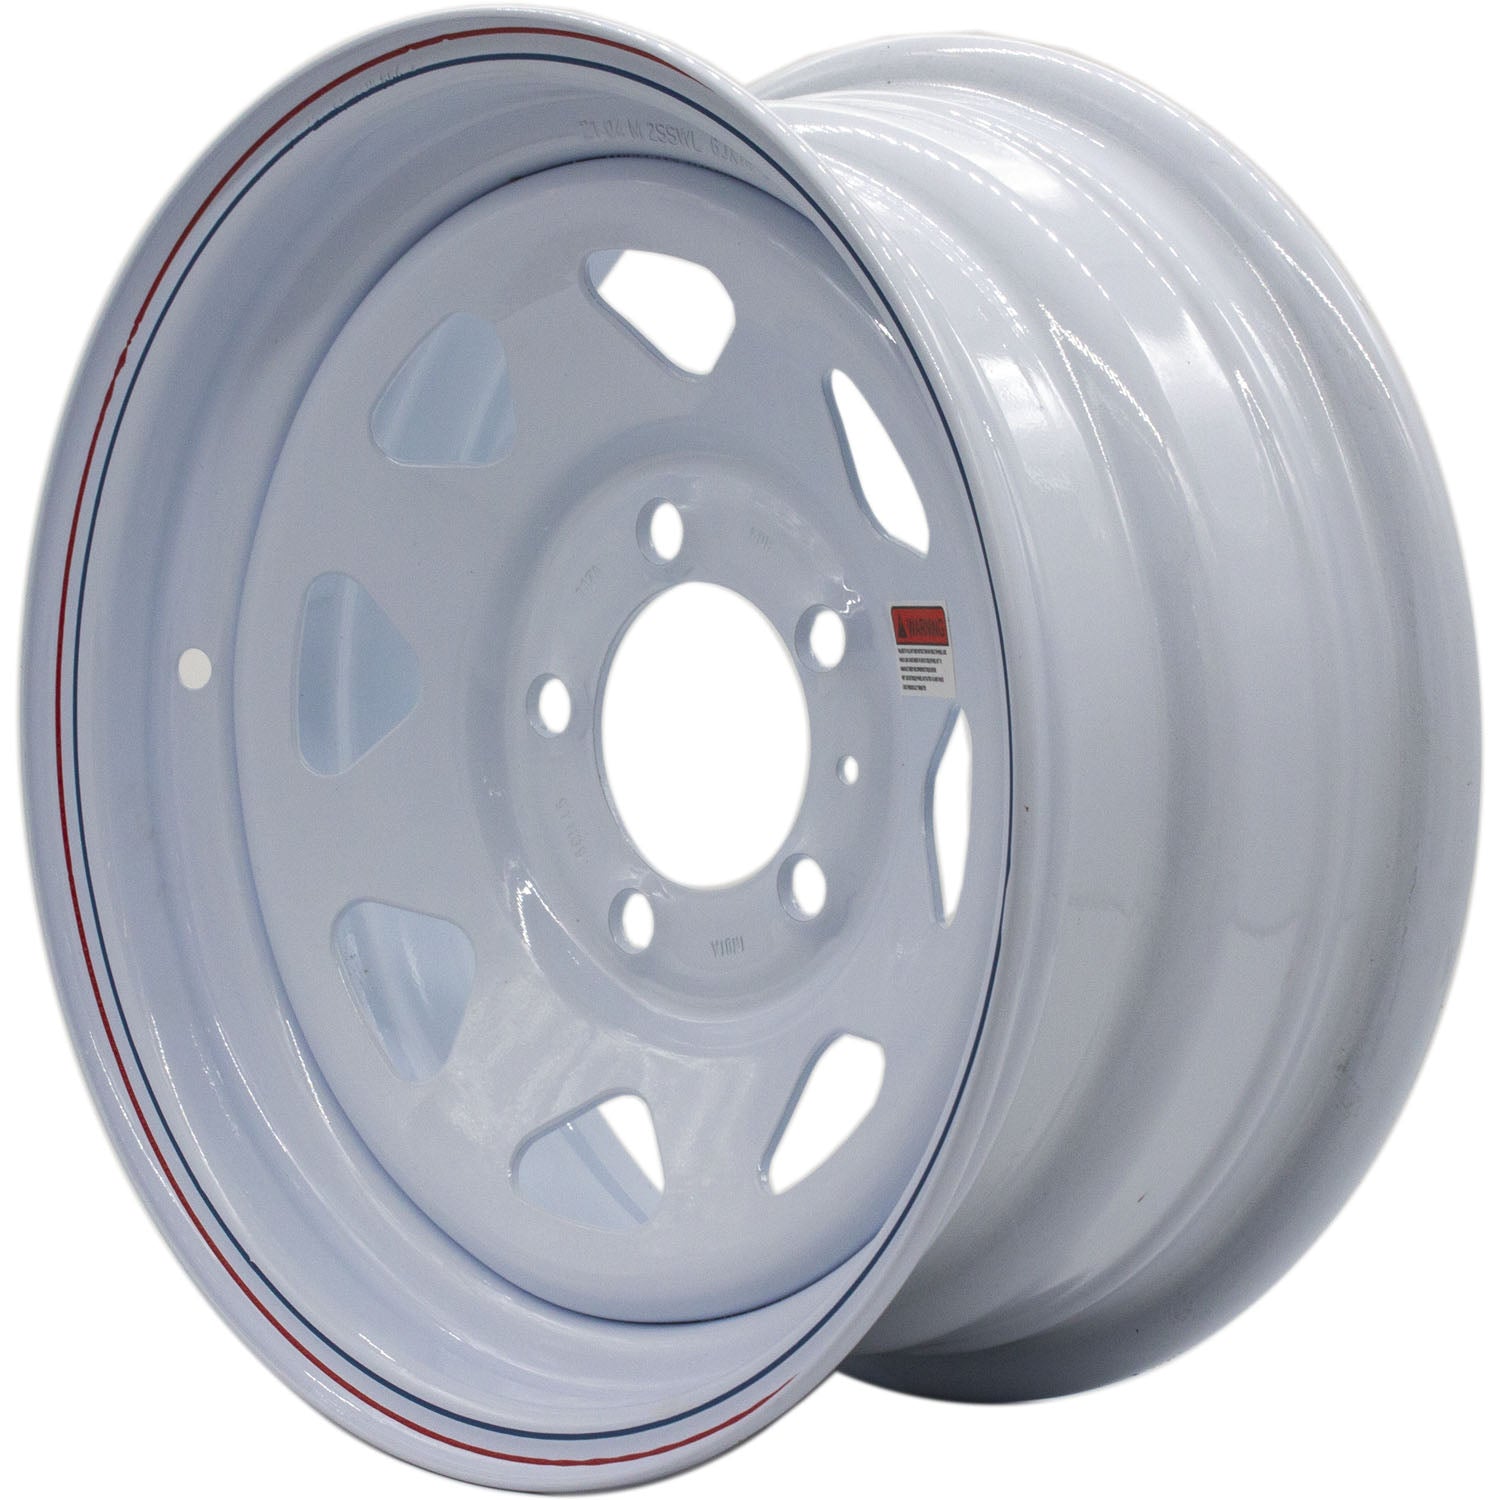 Premium Service 14x5.5 5 On 4.5 Spoked Steel Trailer Wheel White with Pin Stripes